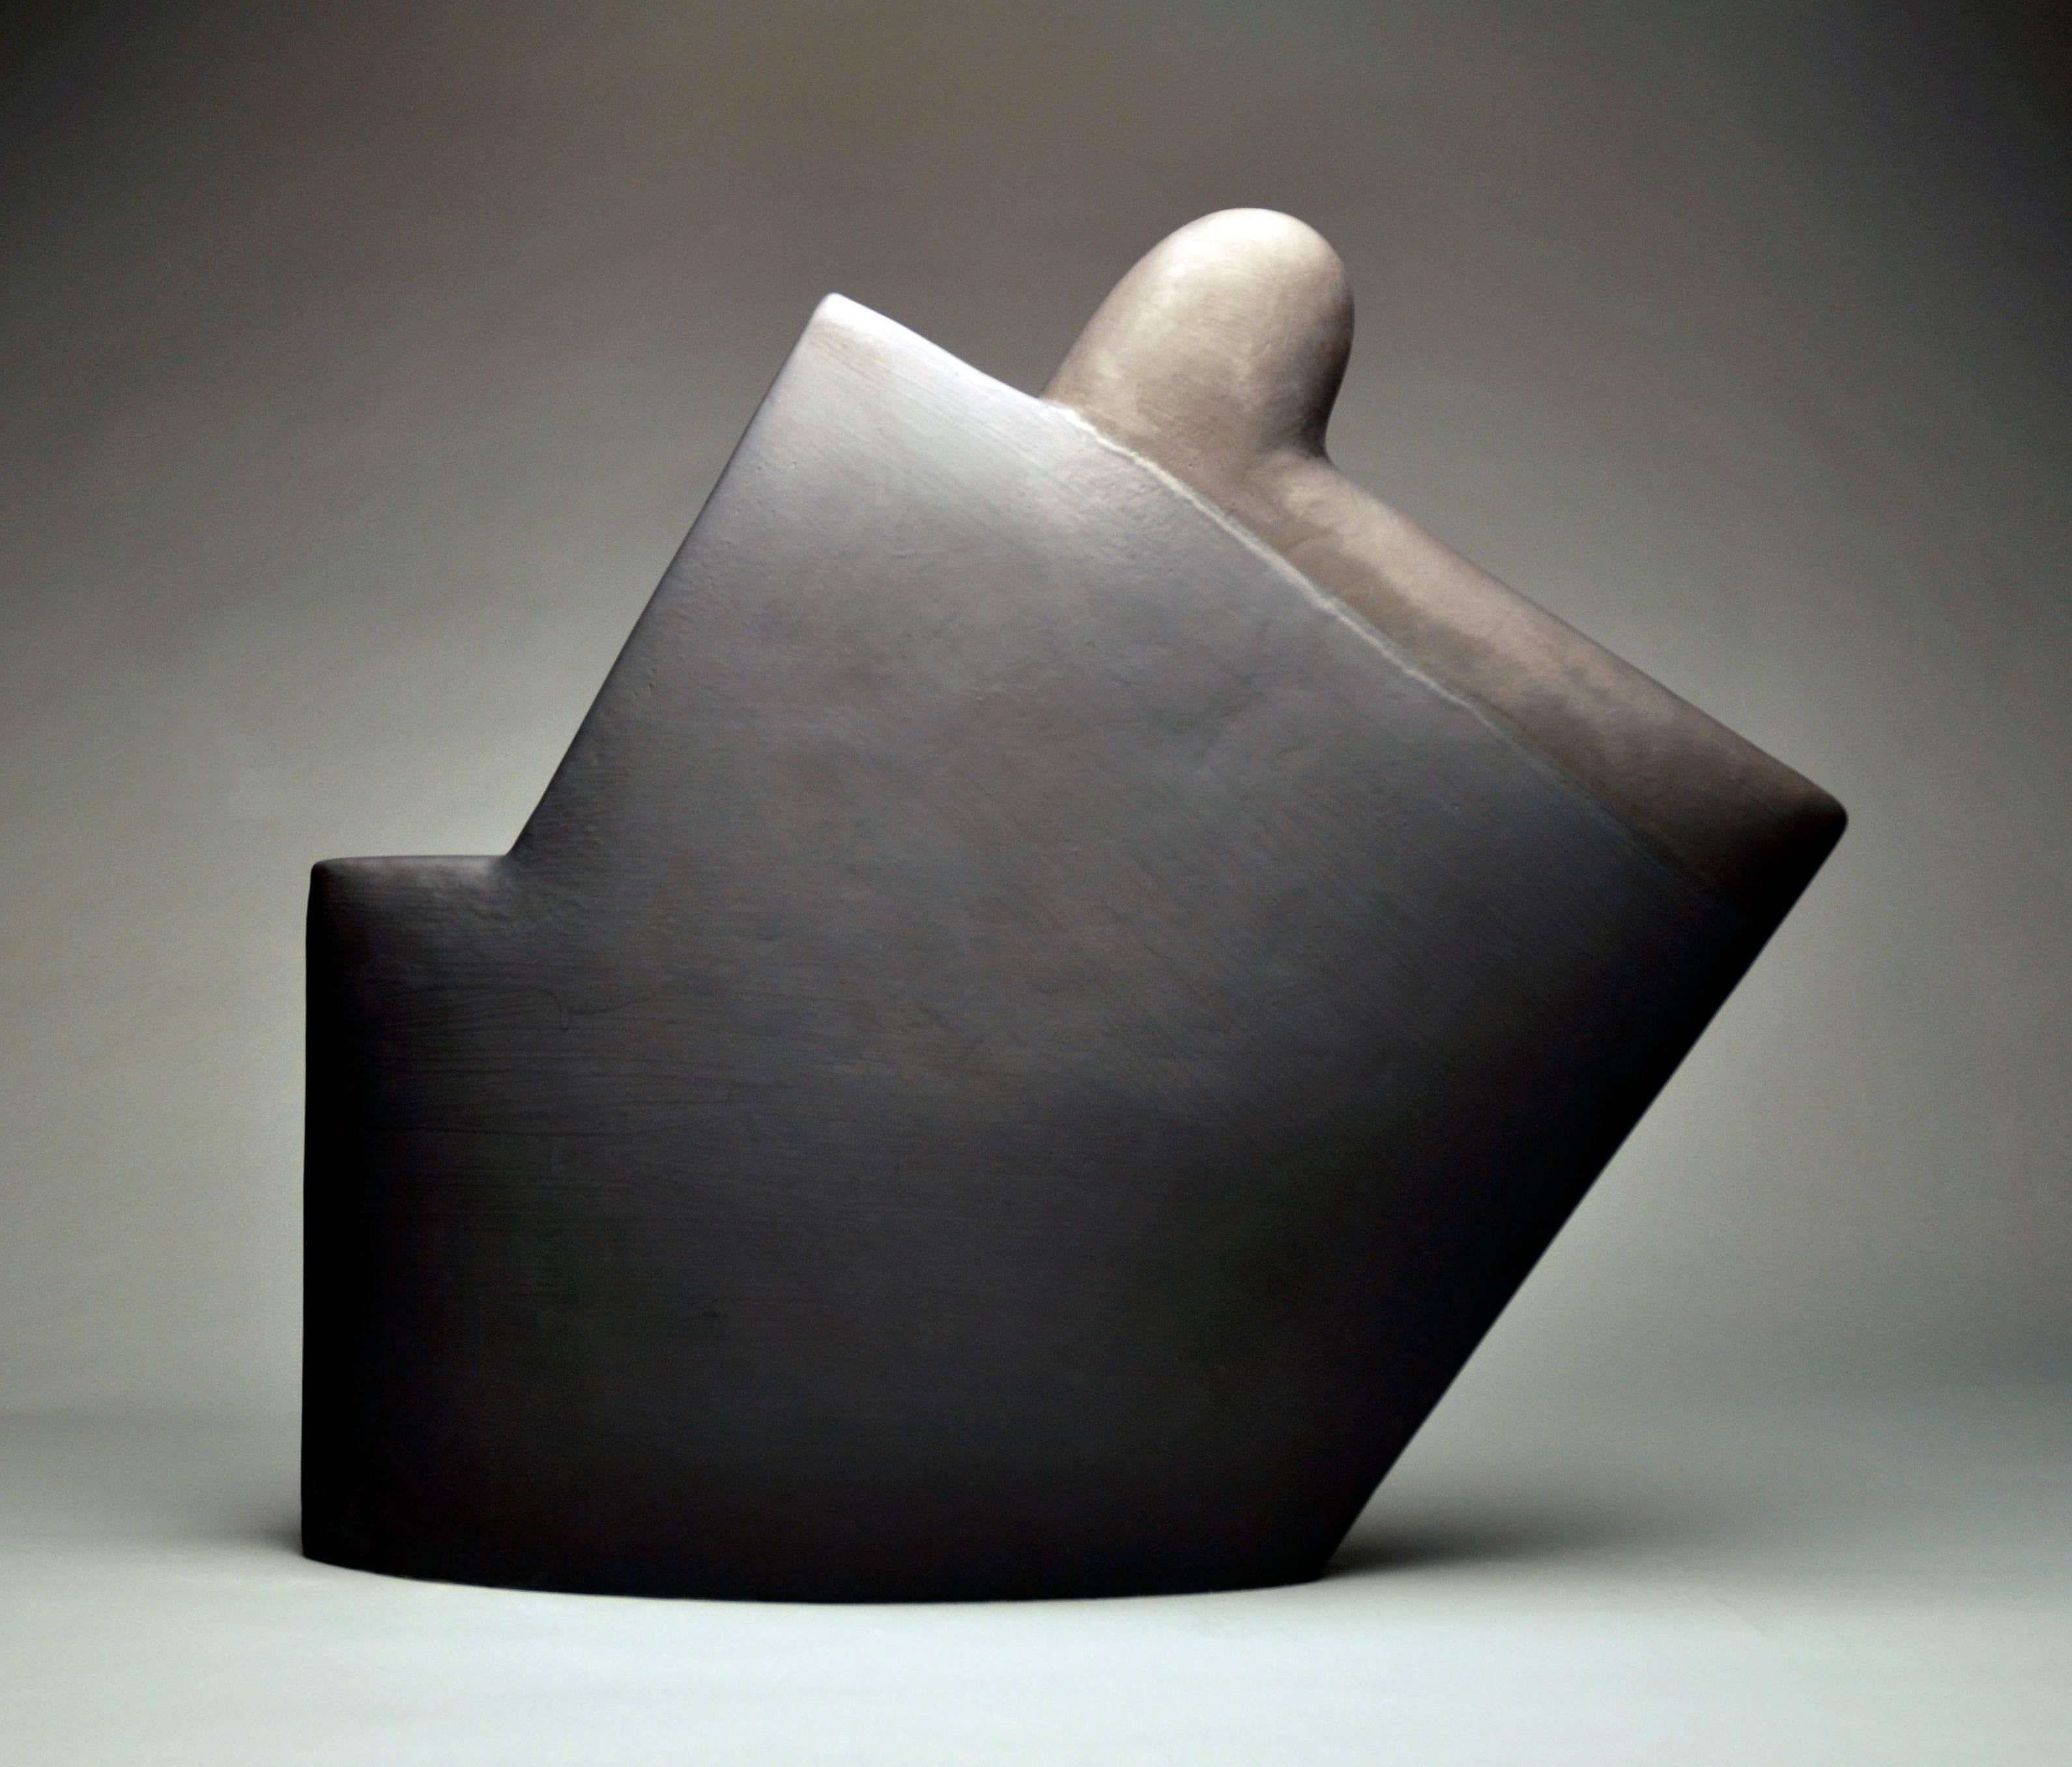 James Marshall Abstract Sculpture - "Black 401", Minimalist Ceramic Sculpture, Liminal Form, Matte Glaze Surface